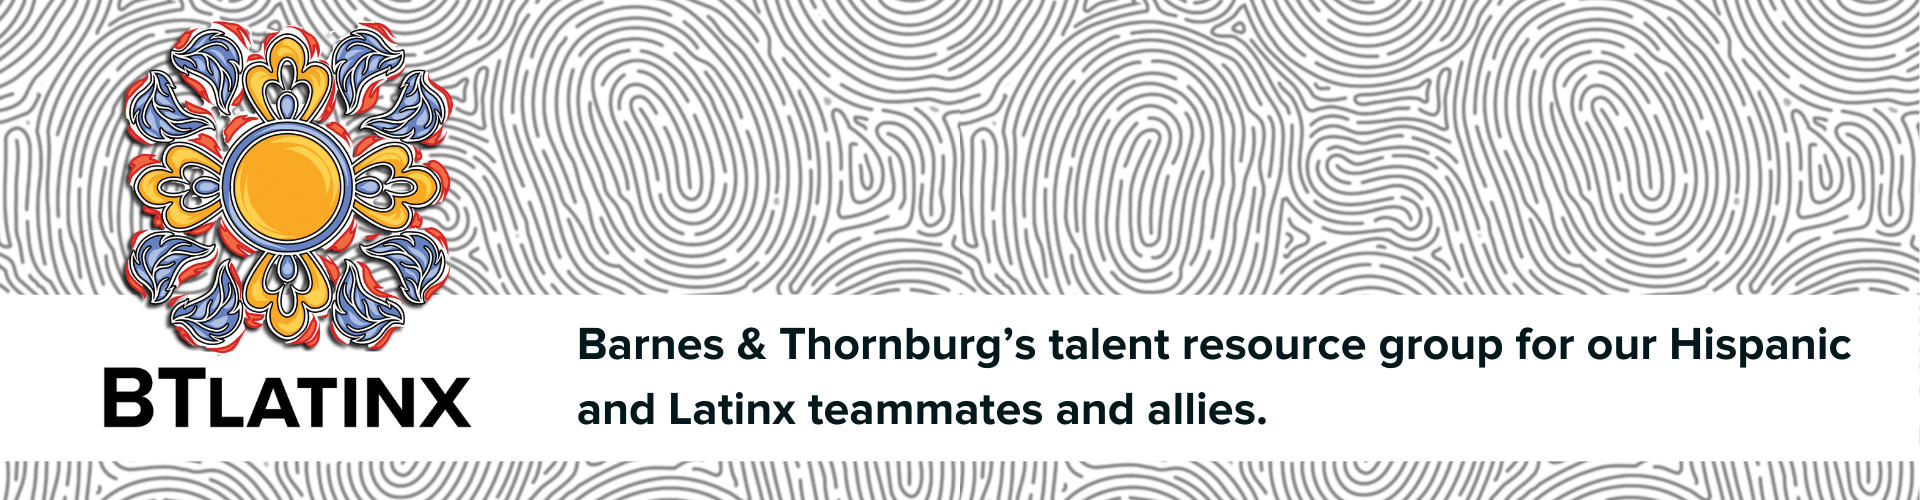 BTLatinx: Barnes & Thornburg’s talent resource group for our Hispanic and Latinx teammates and allies.